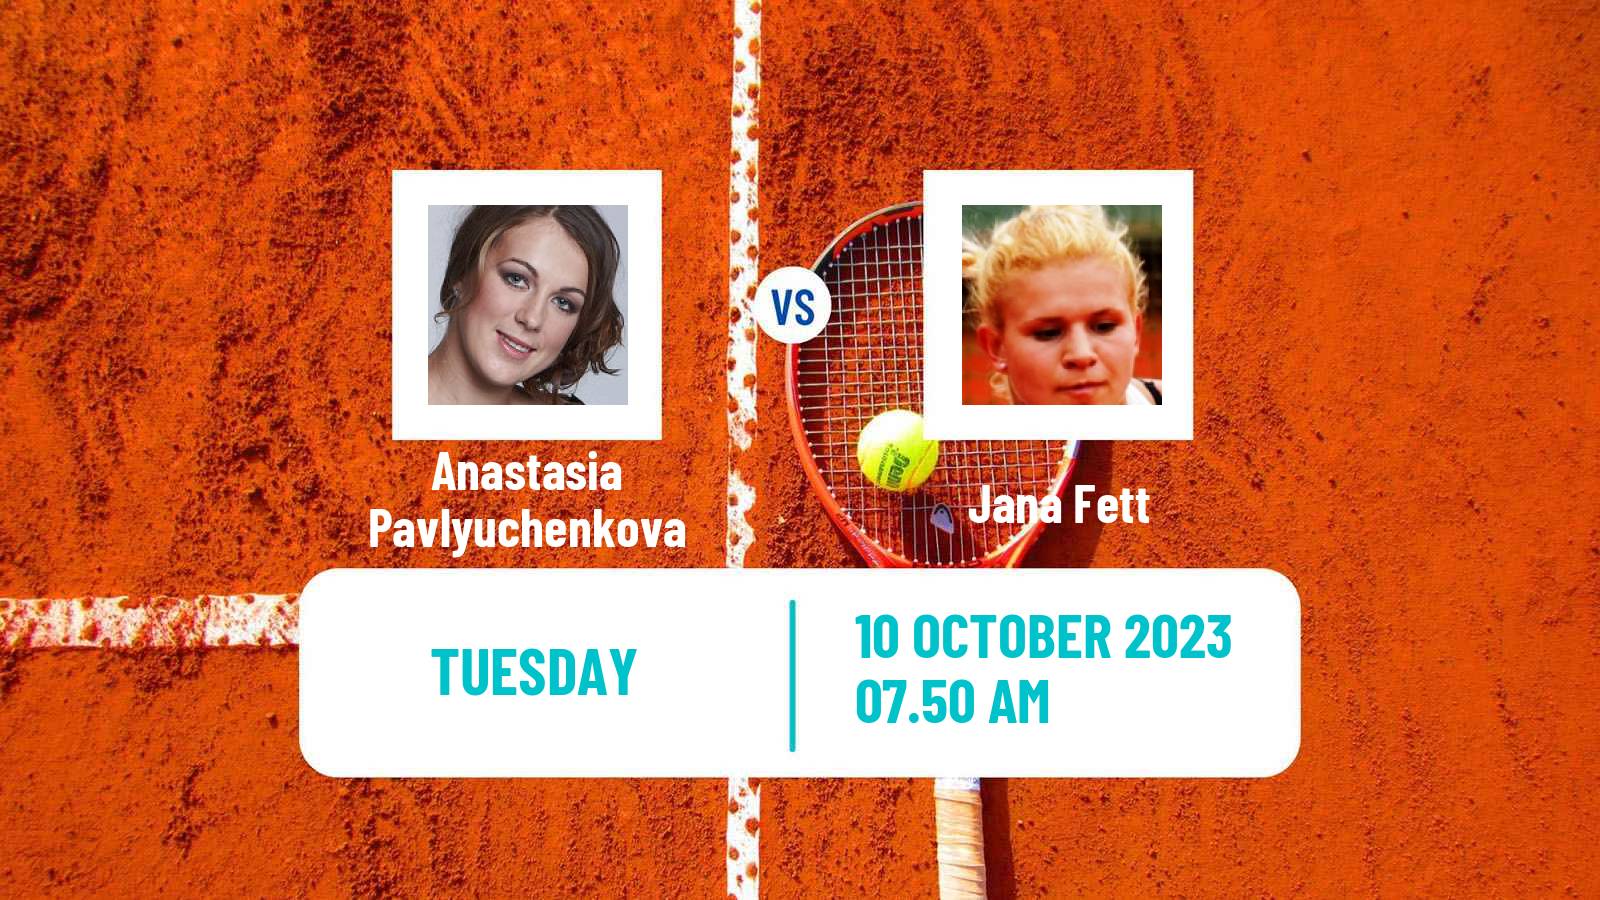 Tennis WTA Hong Kong Anastasia Pavlyuchenkova - Jana Fett